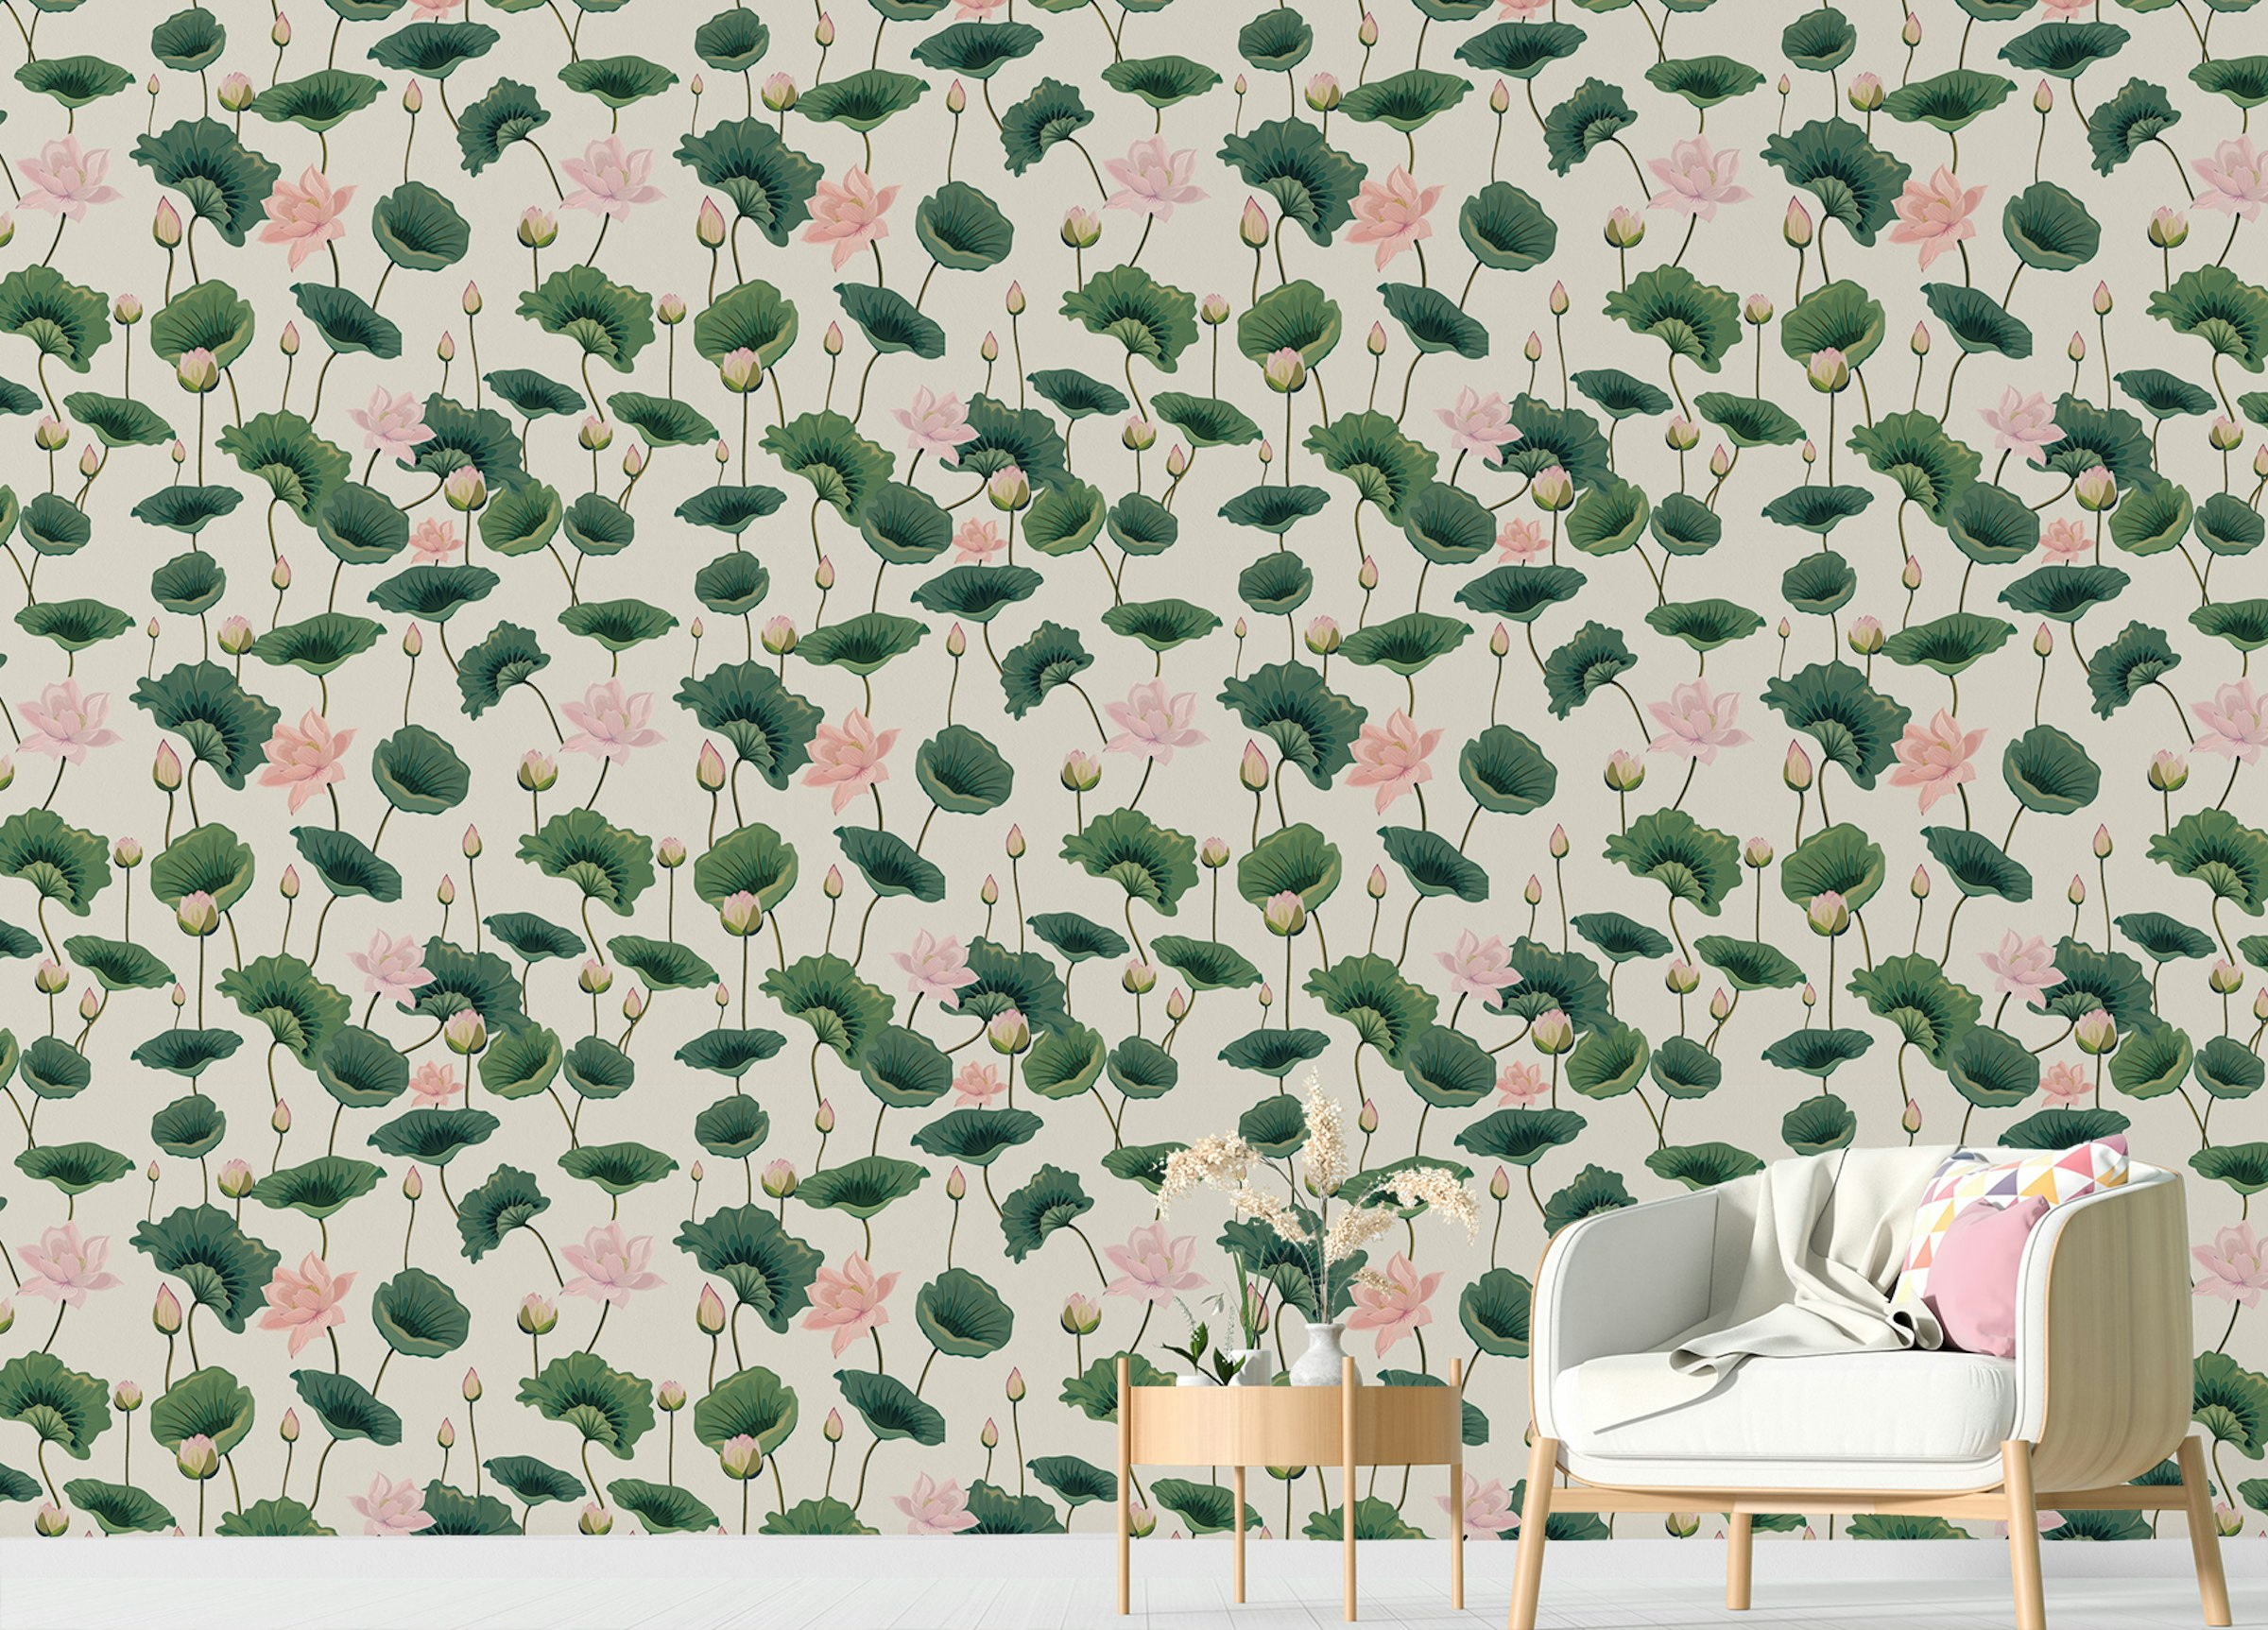 Peel and Stick Blissful Lotus and Lush Greenery Wallpaper